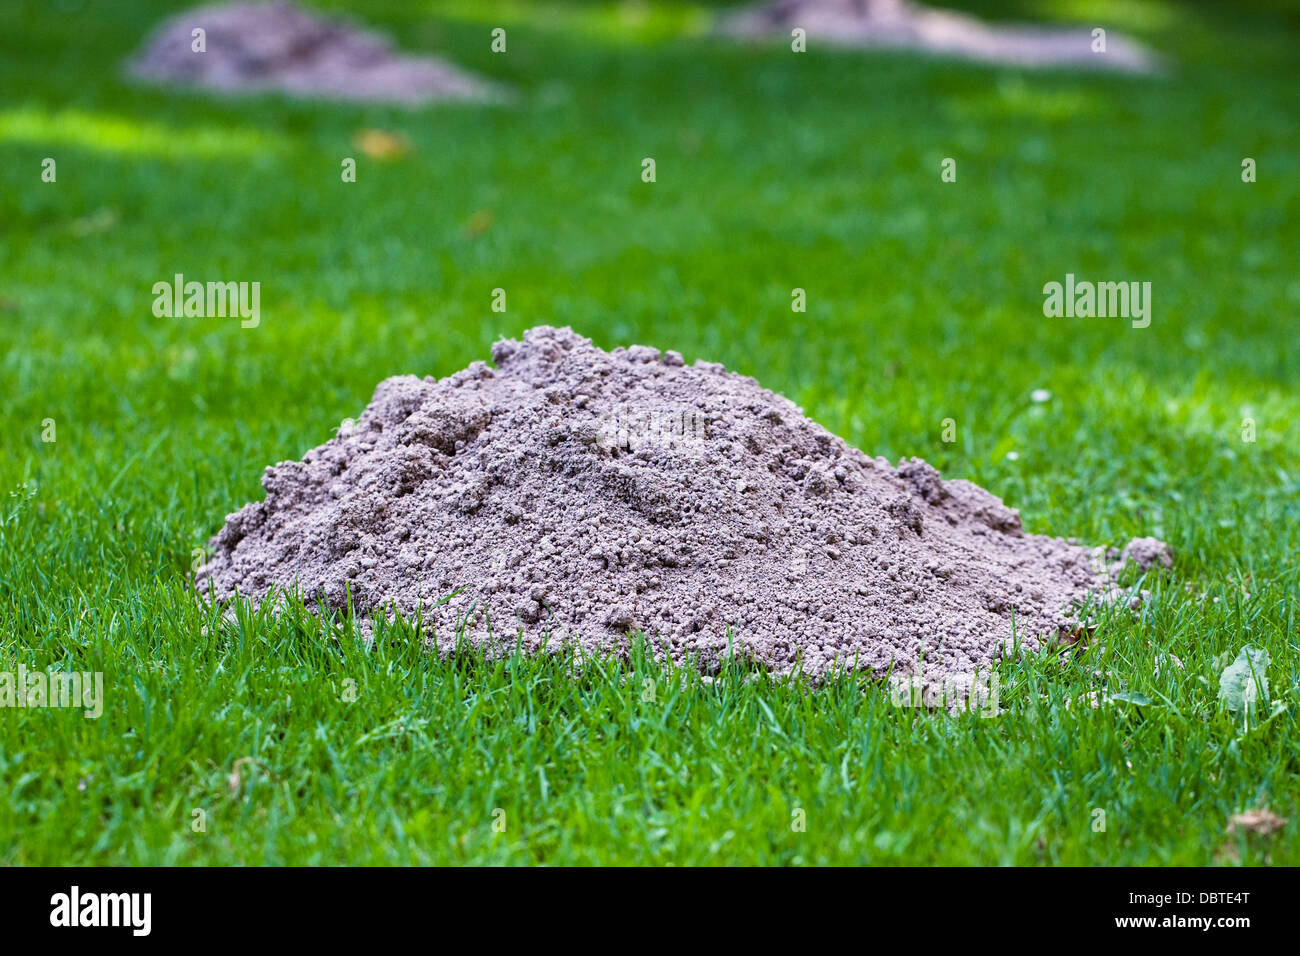 Molehill In The Lawn Stock Photo Alamy